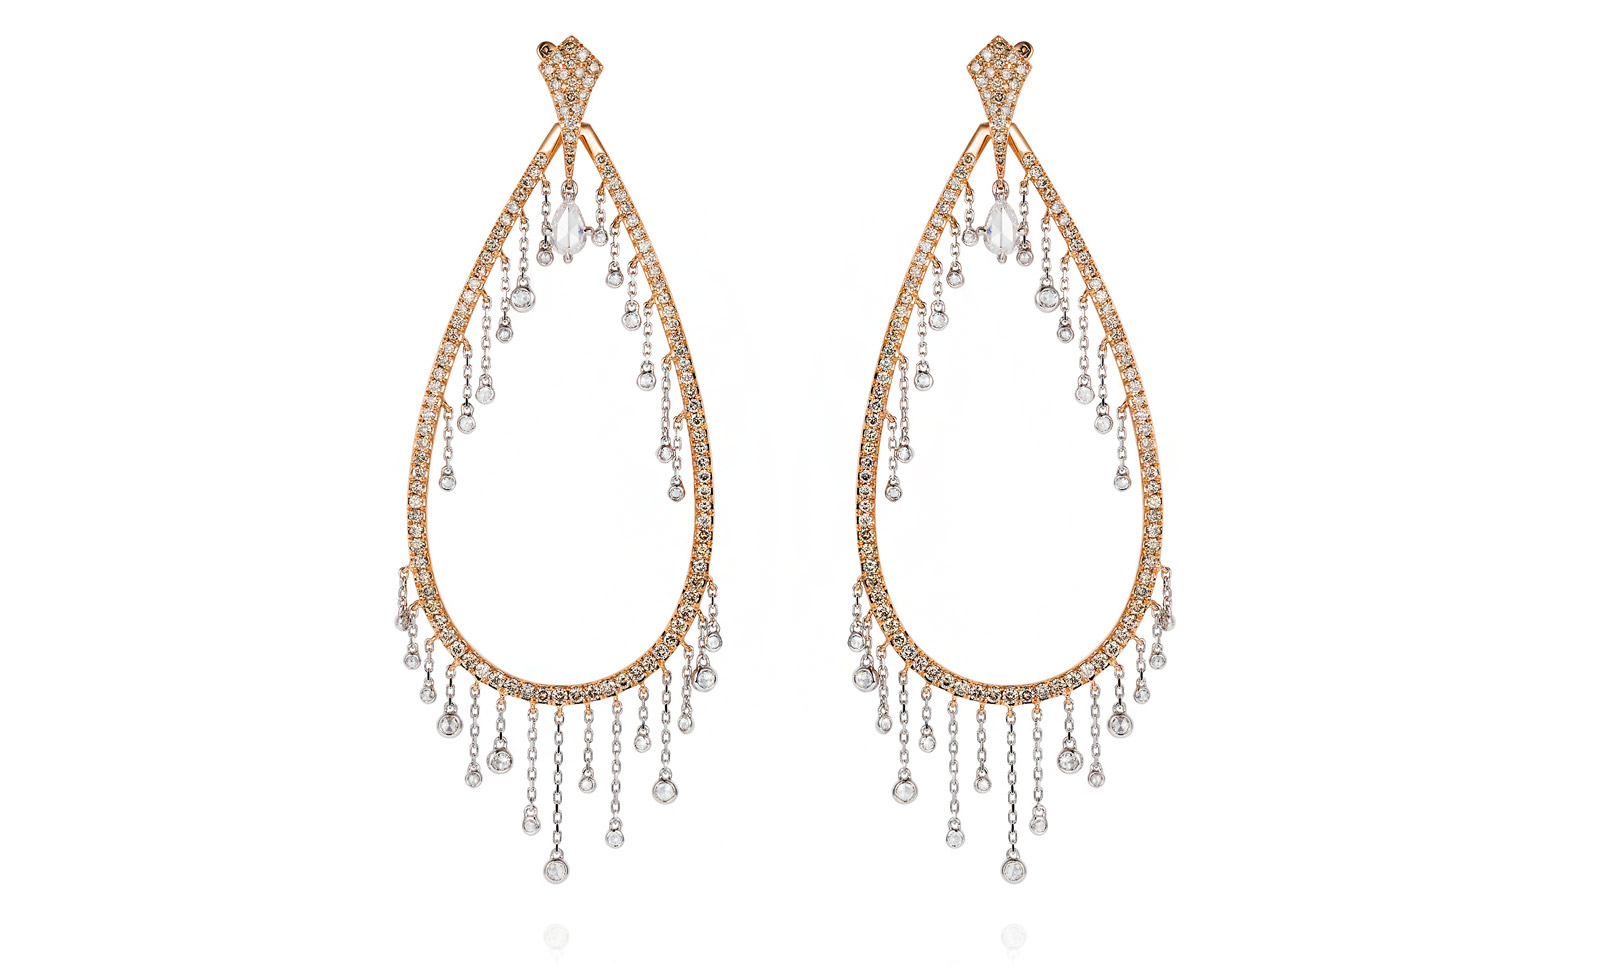 Mike Joseph Waterfall earrings in rose gold and diamonds